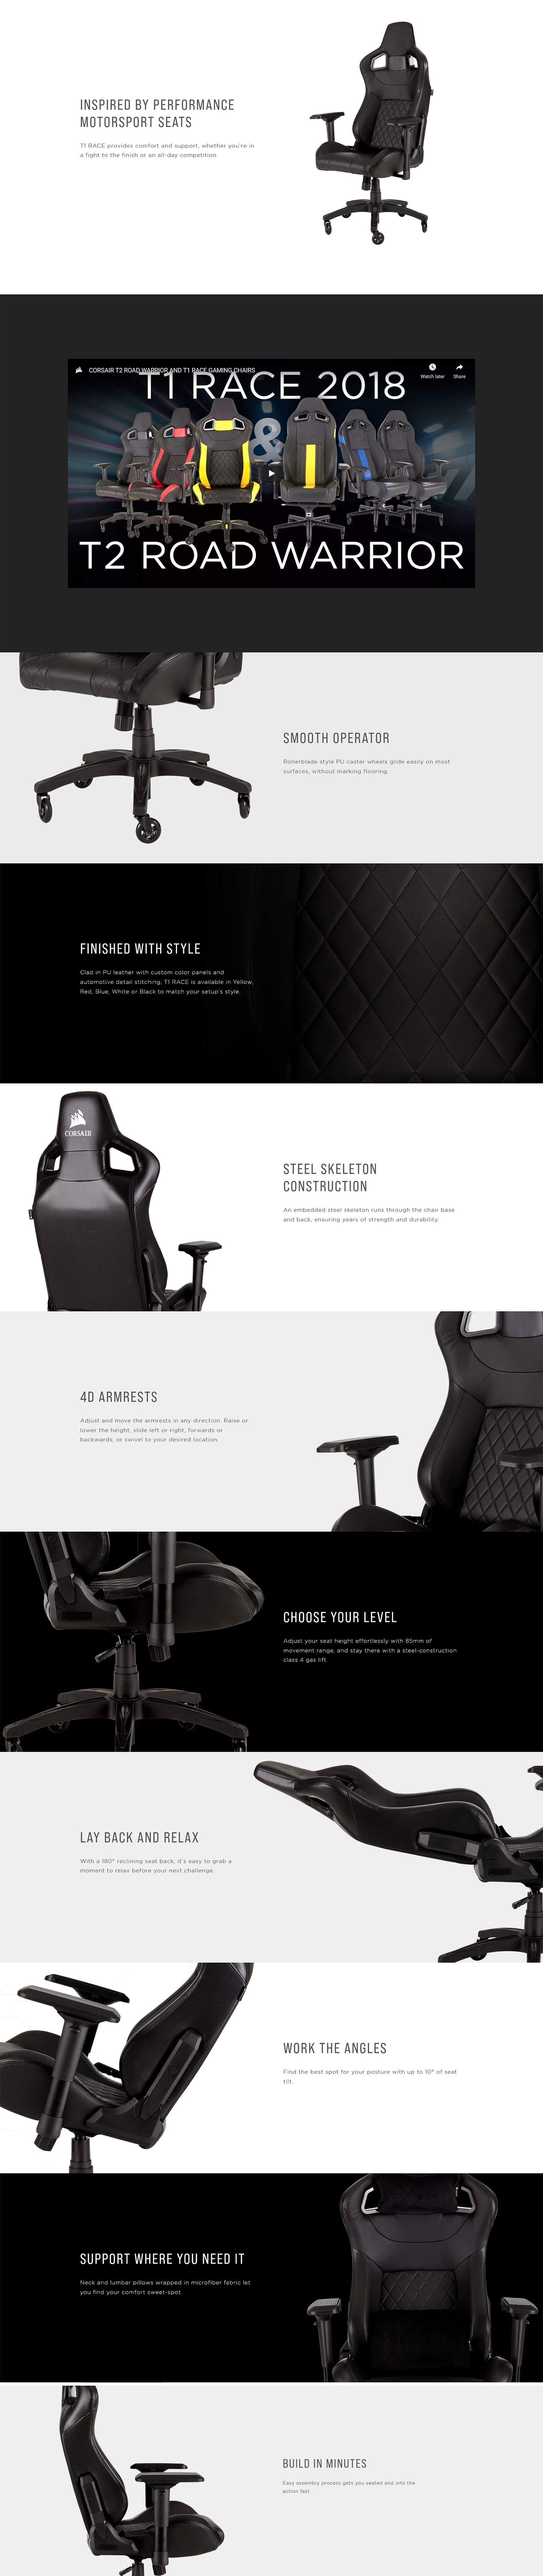 Corsair T1 RACE (2018) Gaming Chair - Black/White CF-9010012-WW Details